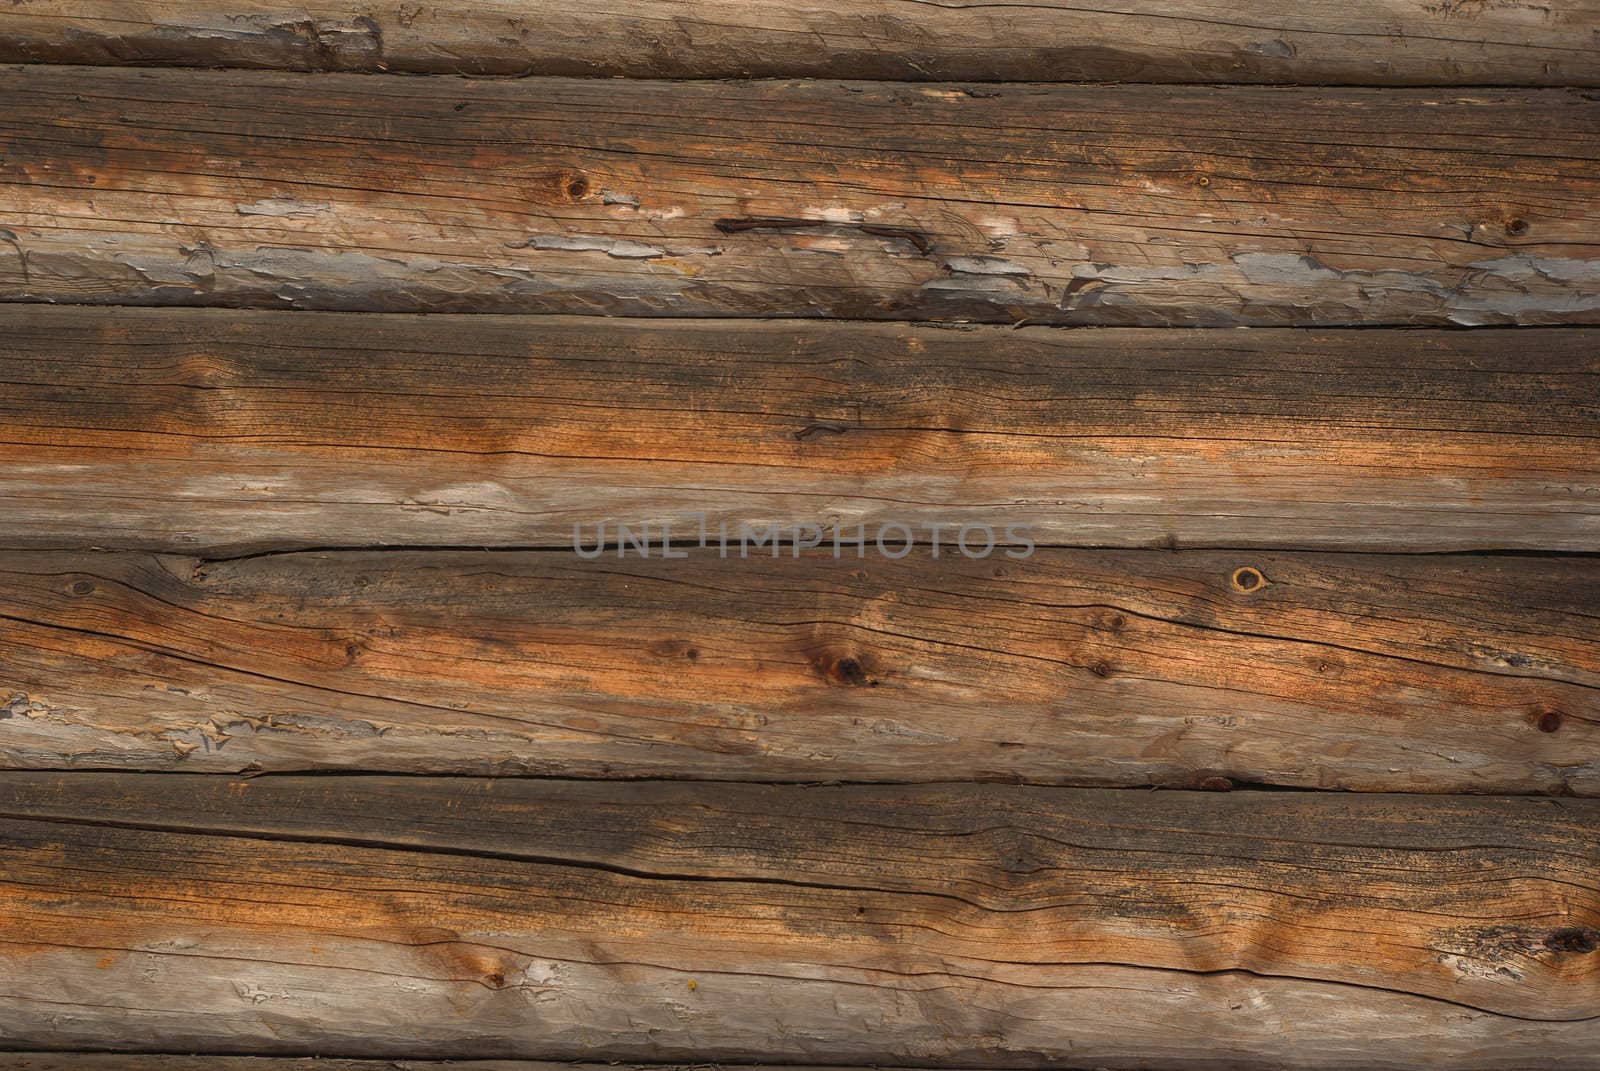 Log cabin background ,The side of a log building
